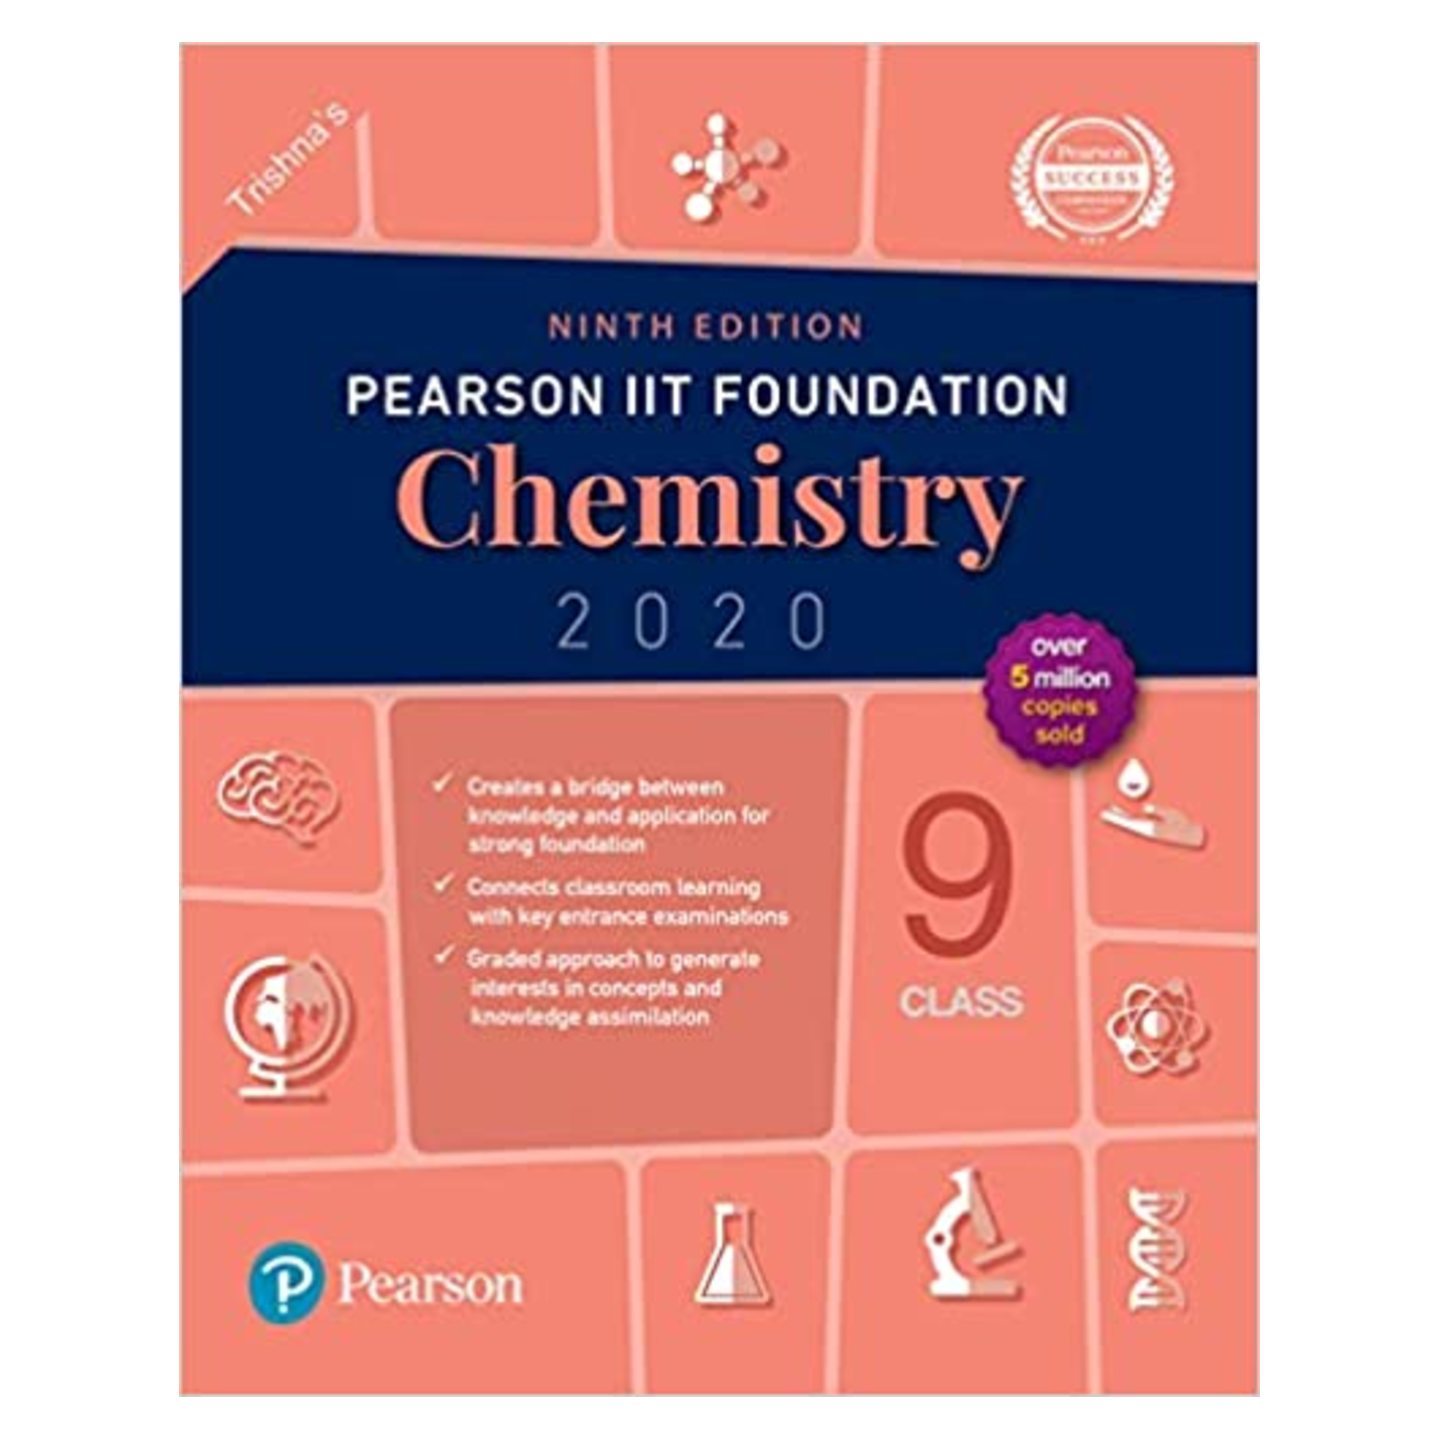 Pearson IIT Foundation Series Class 9 Chemistry